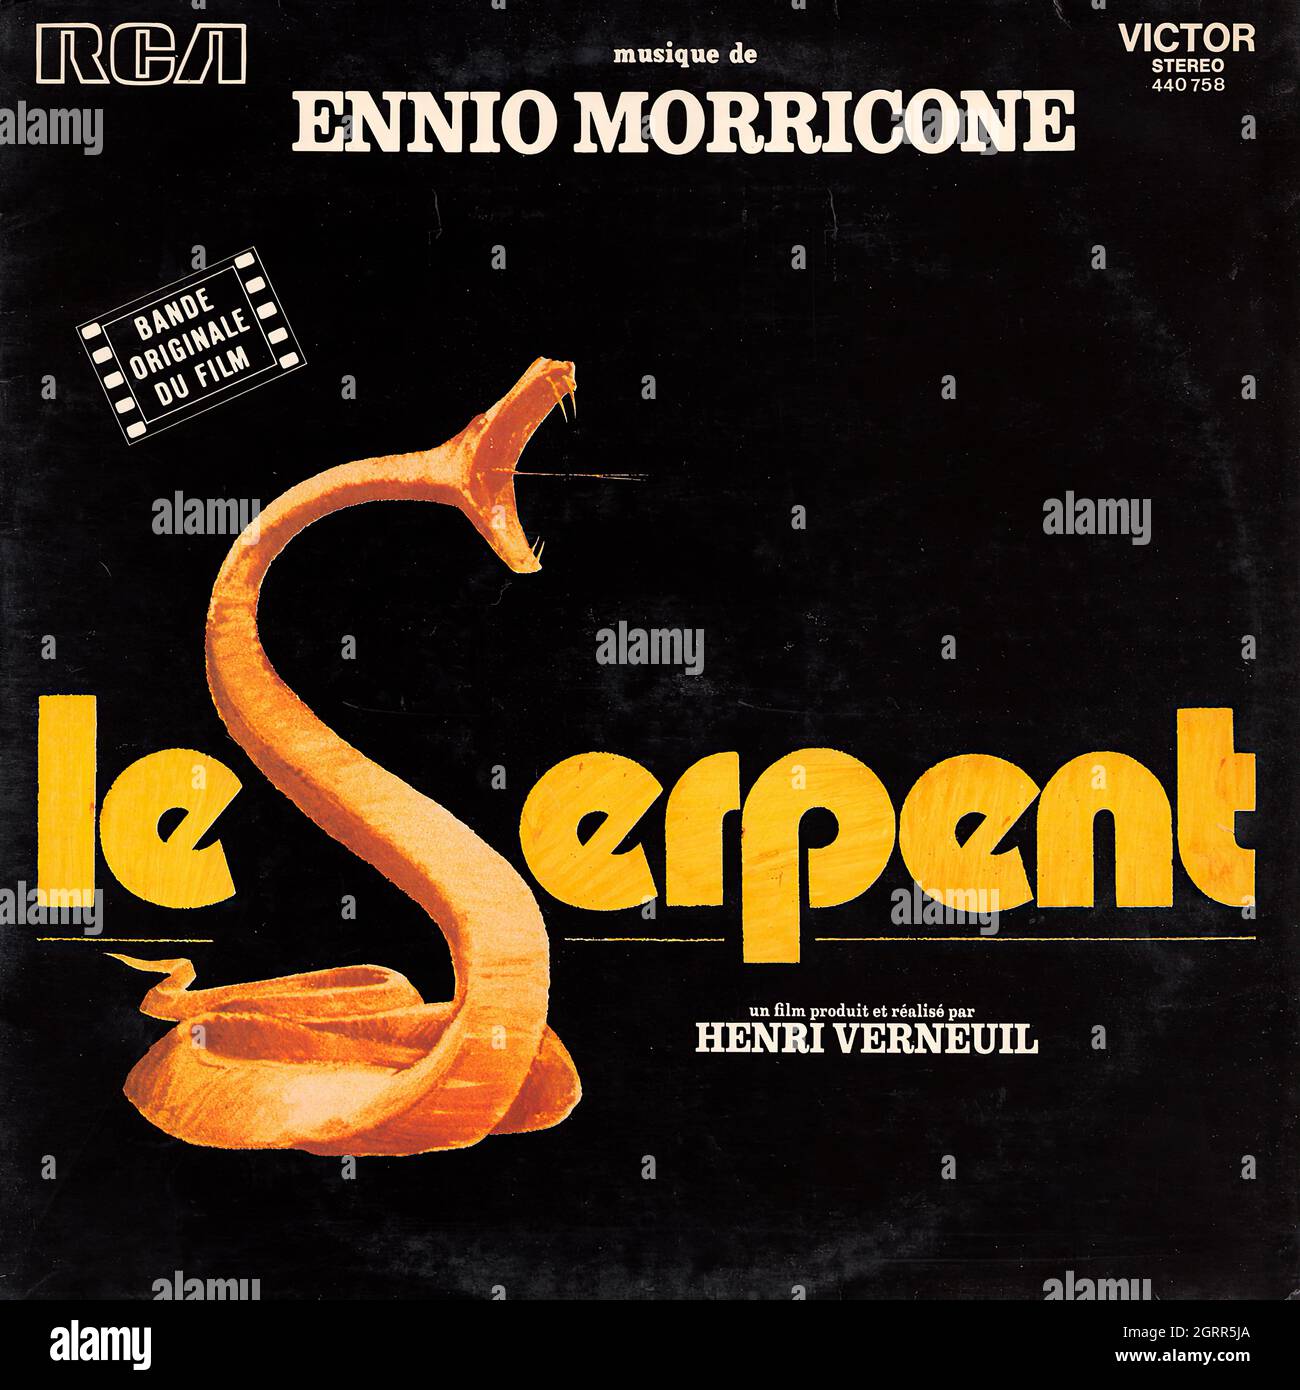 Ennio Morricone - Le serpent o.s.t. - Vintage Vinyl Record Cover Stock Photo